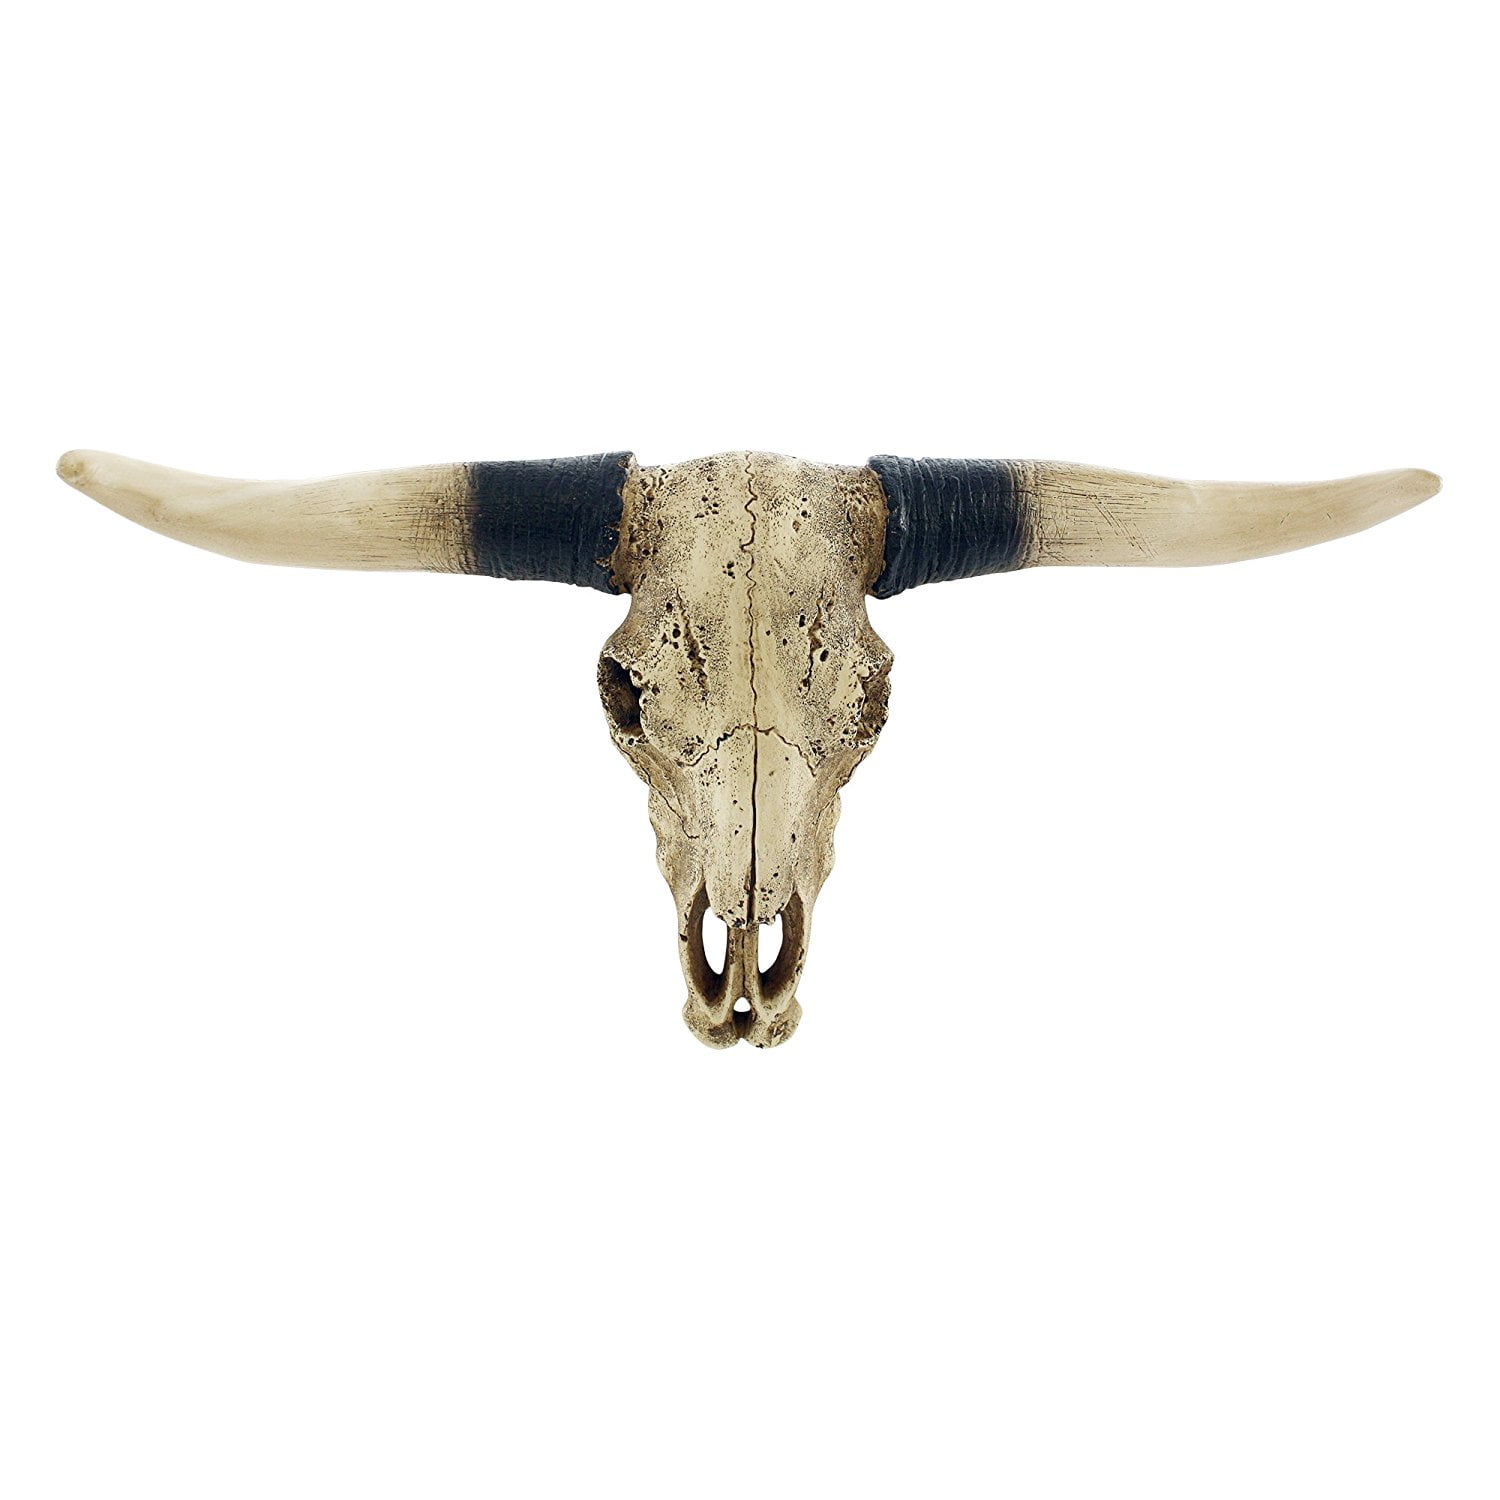 5 Southwestern Steer/Bull Skull Horns Head SMALL Western Wall Art 6 1/4" x 2 1/2 